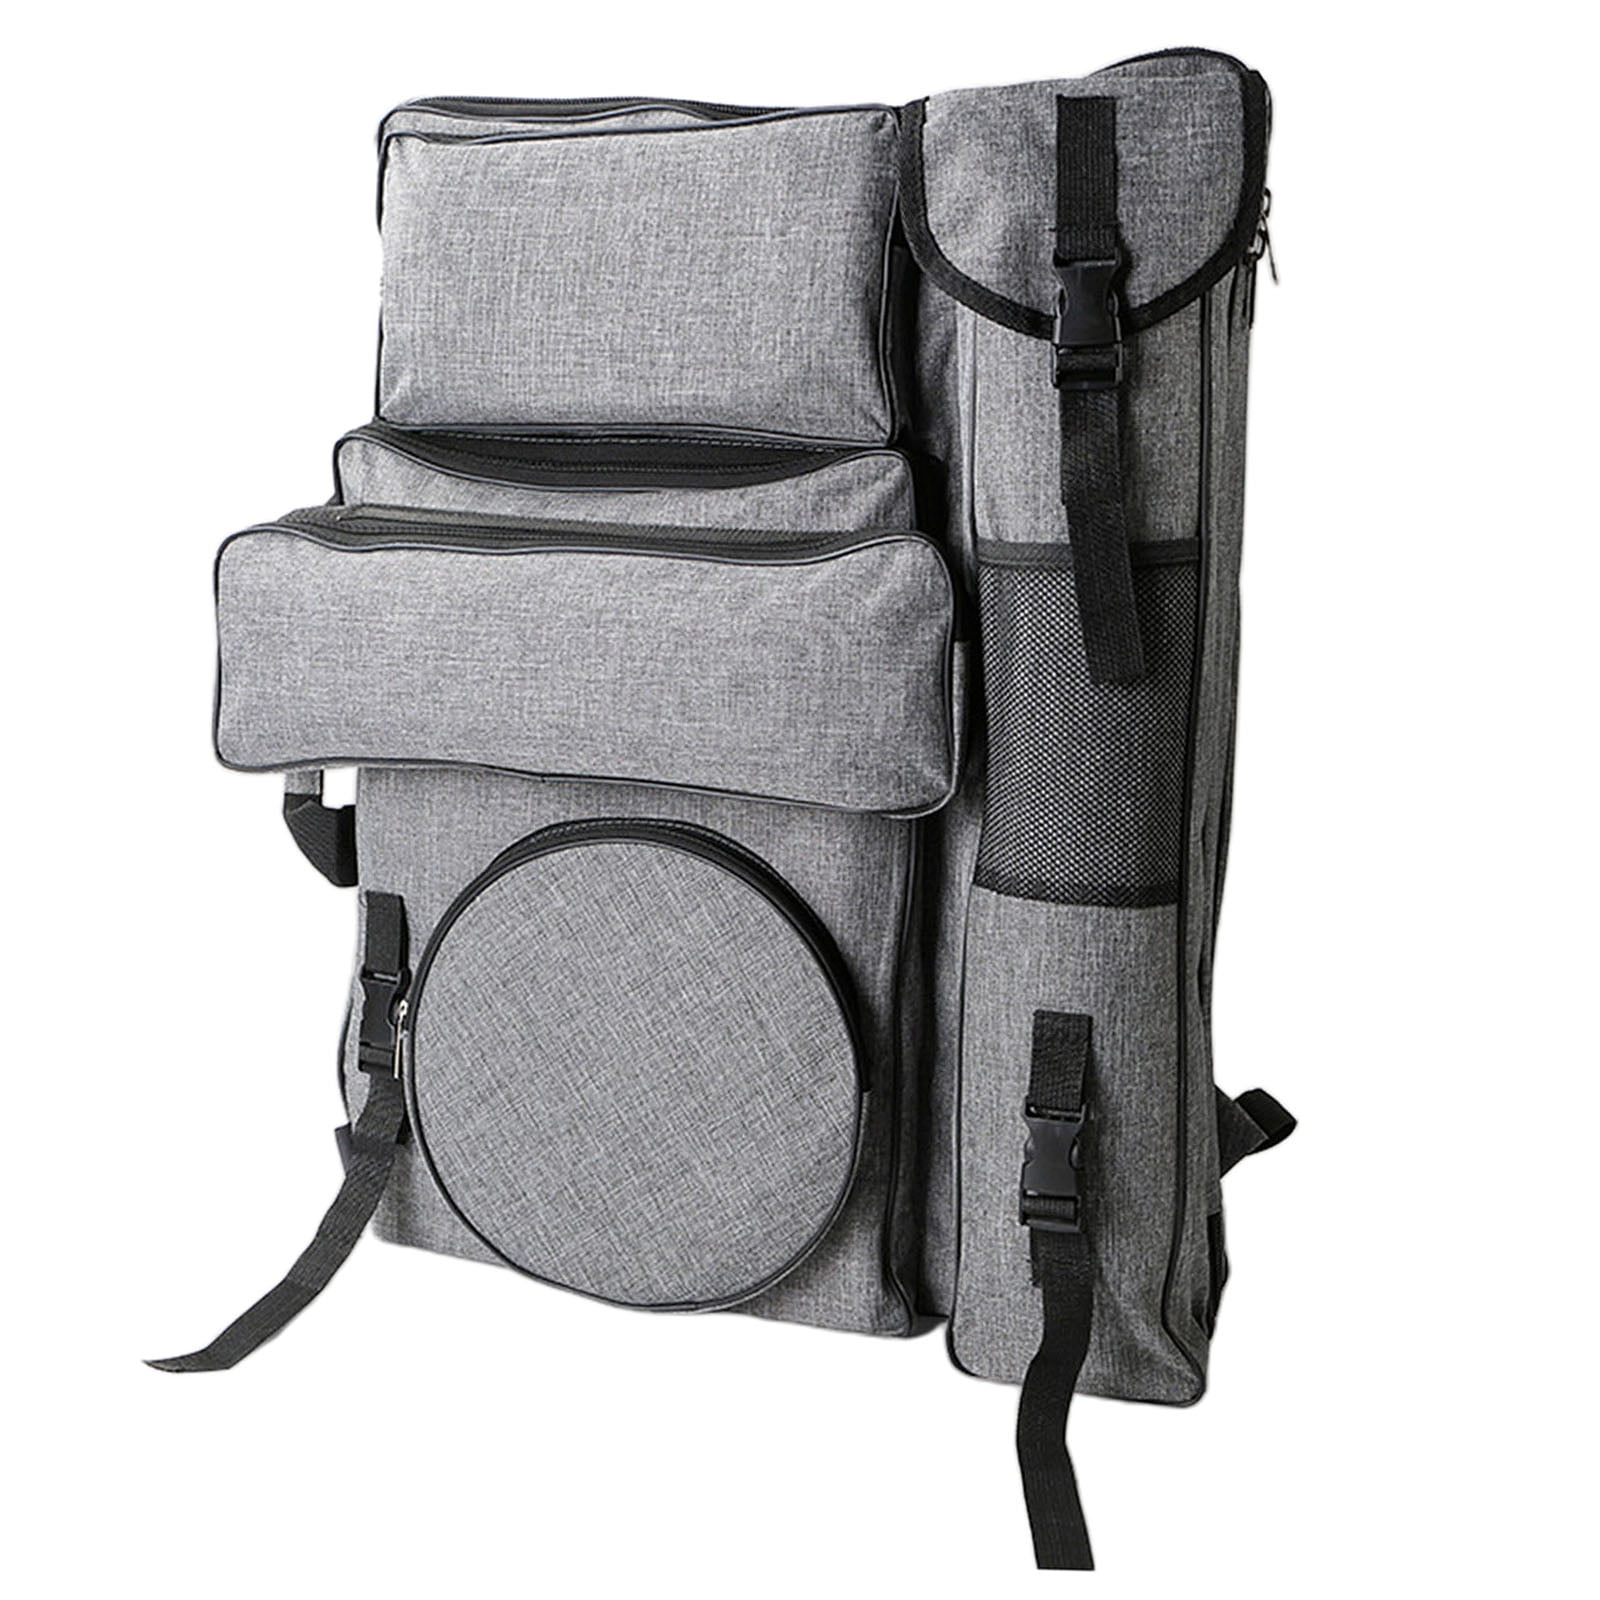 Water-Resistant Artist Portfolio Tote Backpack Multiply Function 66 x 50cm Bag for Art Supplies Storage Artist Portfolio Carry Backpack Red